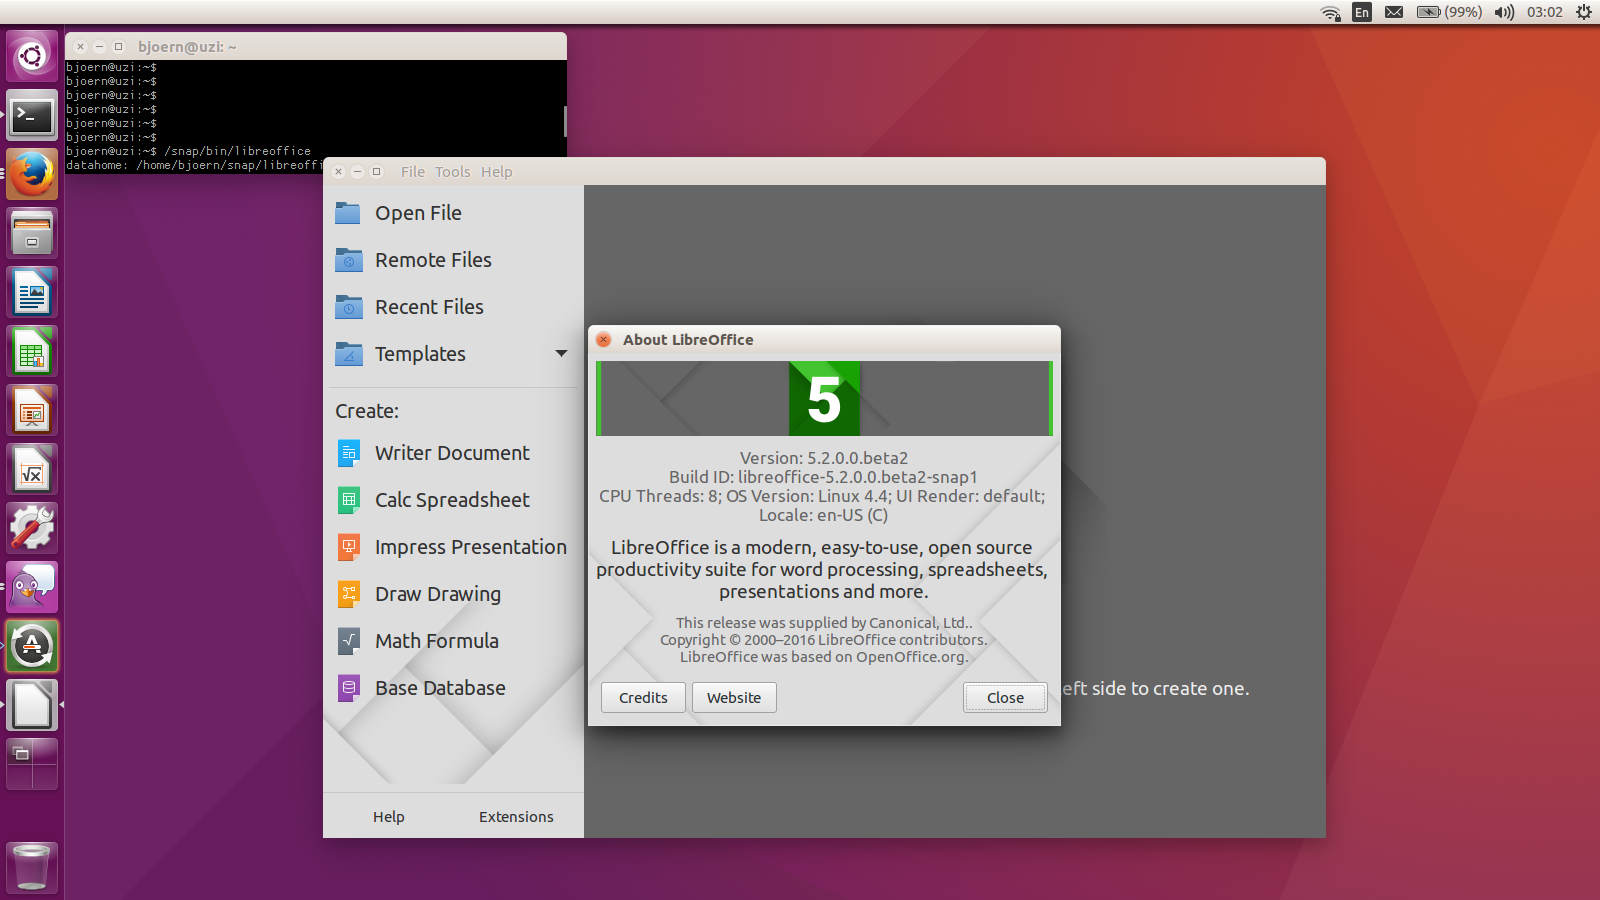 LibreOffice 5.2.0 beta2 installed as a snap on Ubuntu 16.04